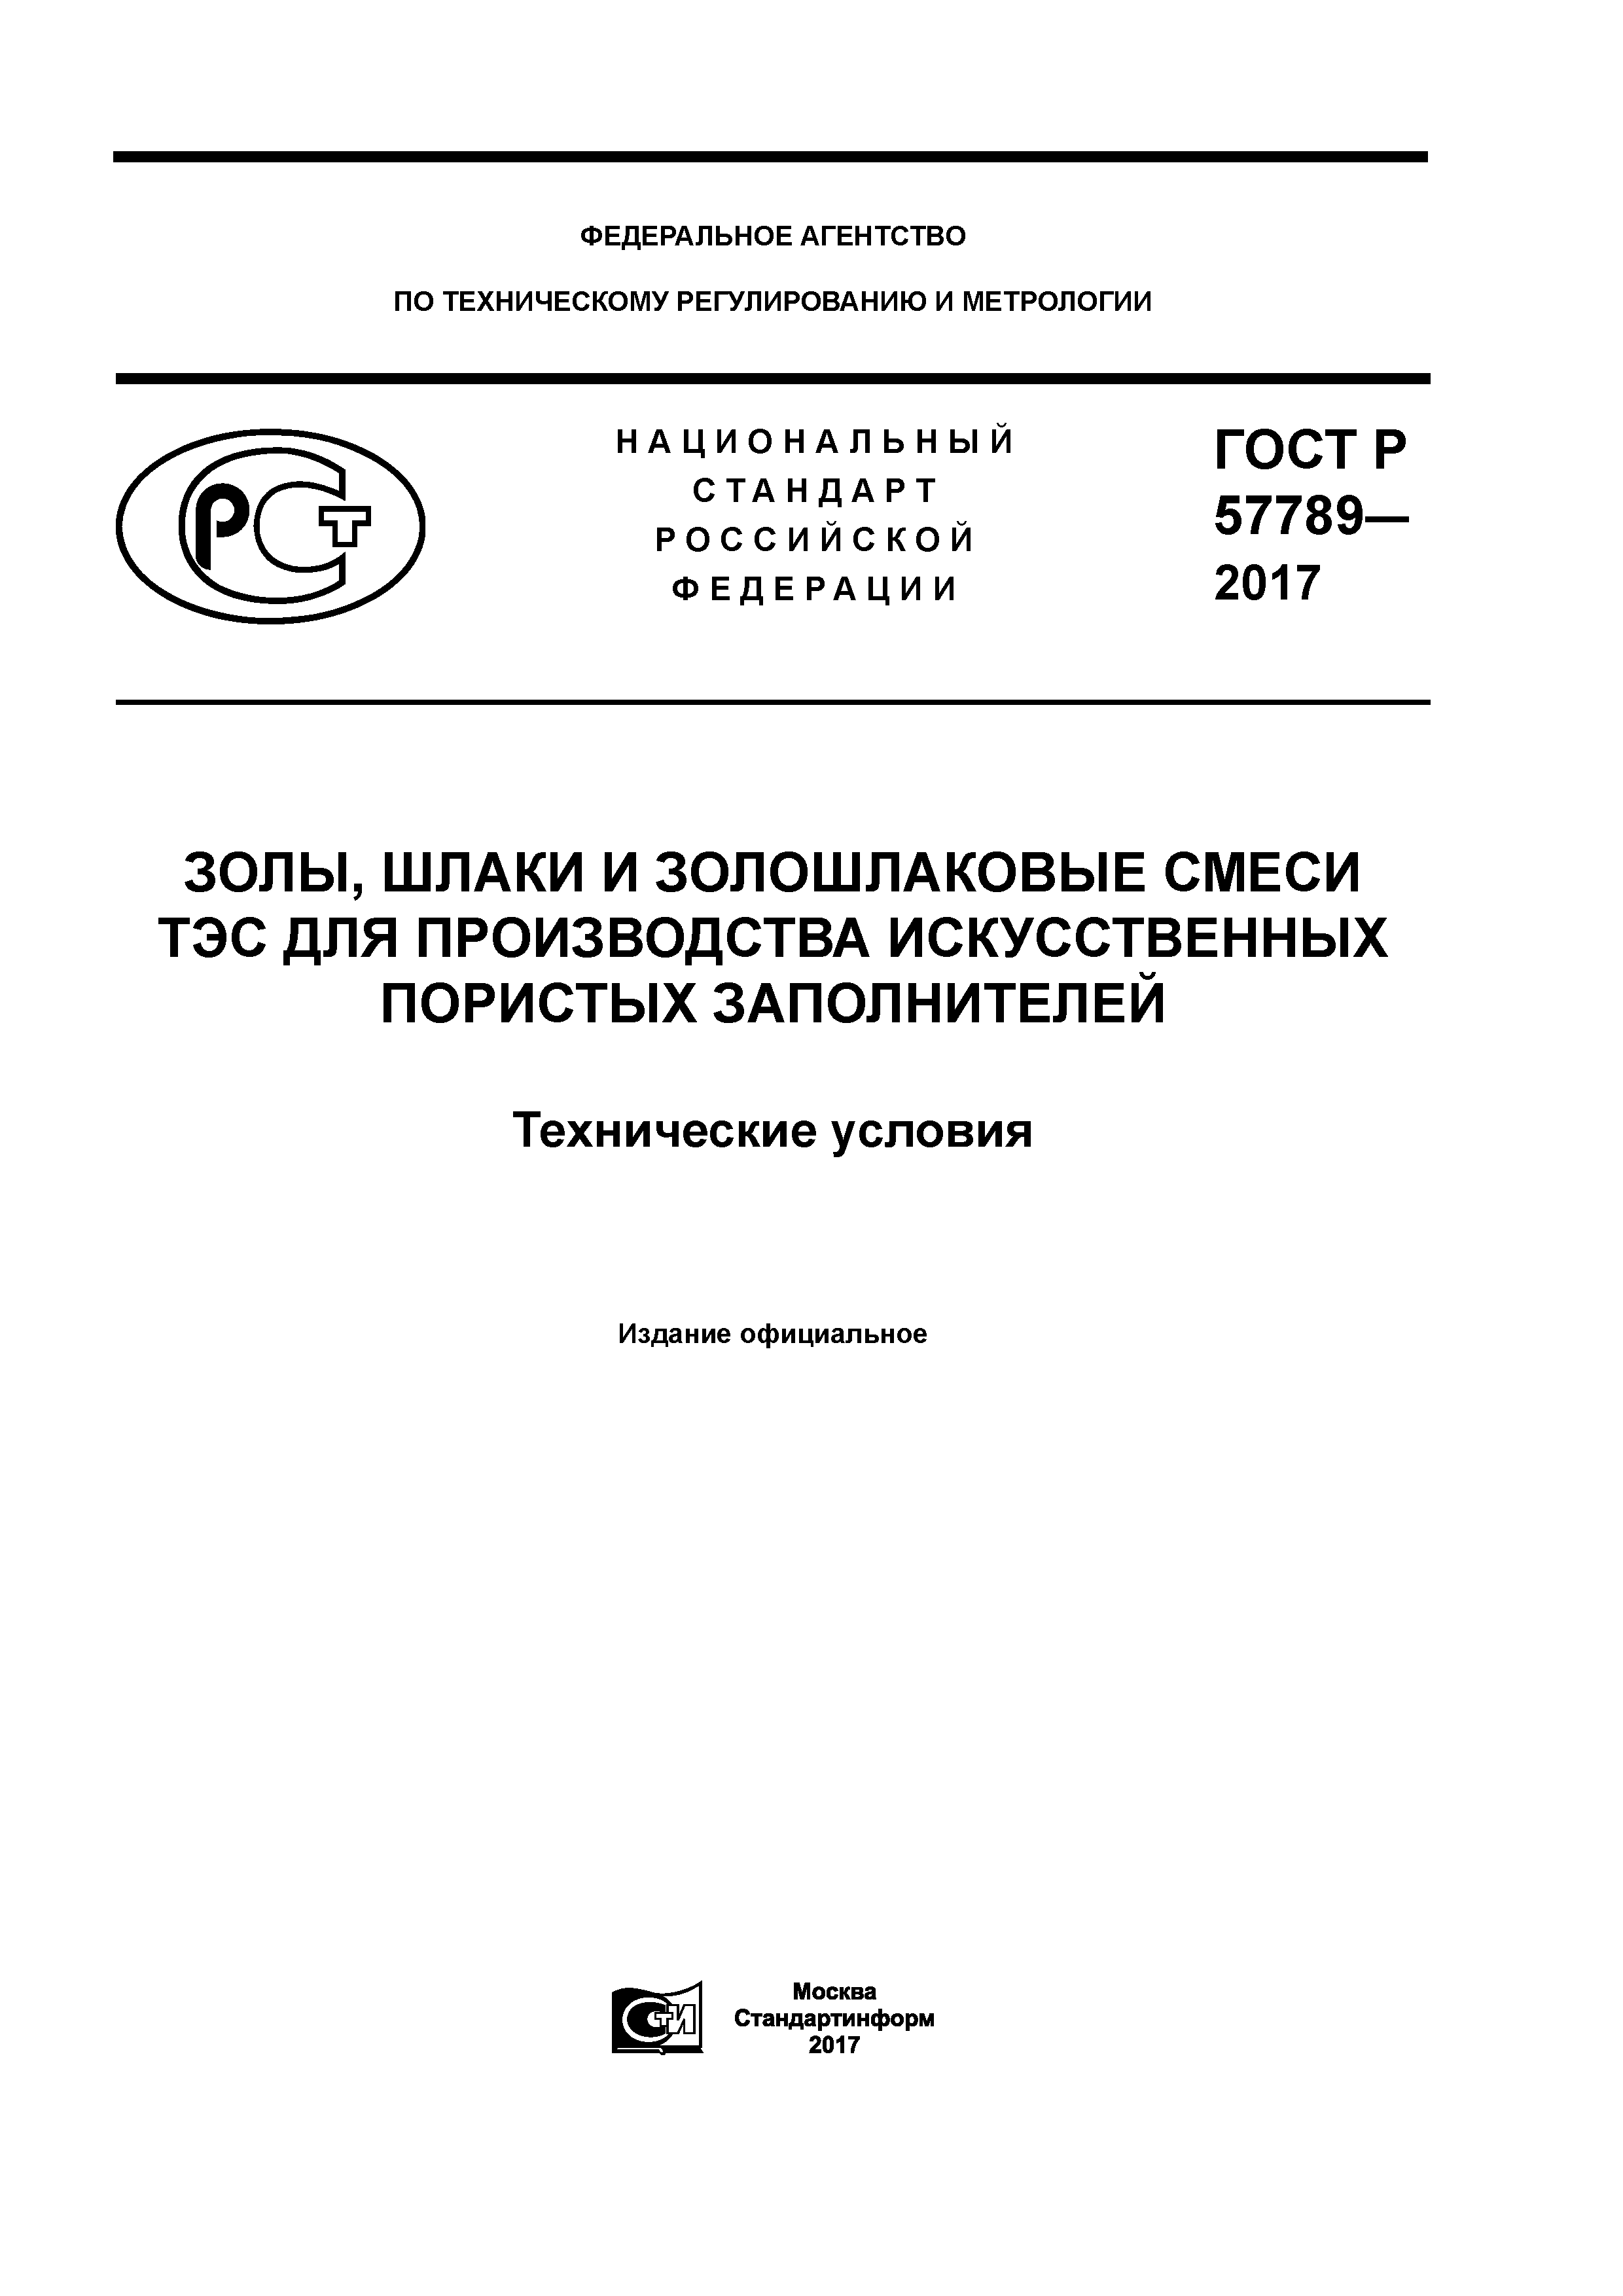 ГОСТ Р 57789-2017